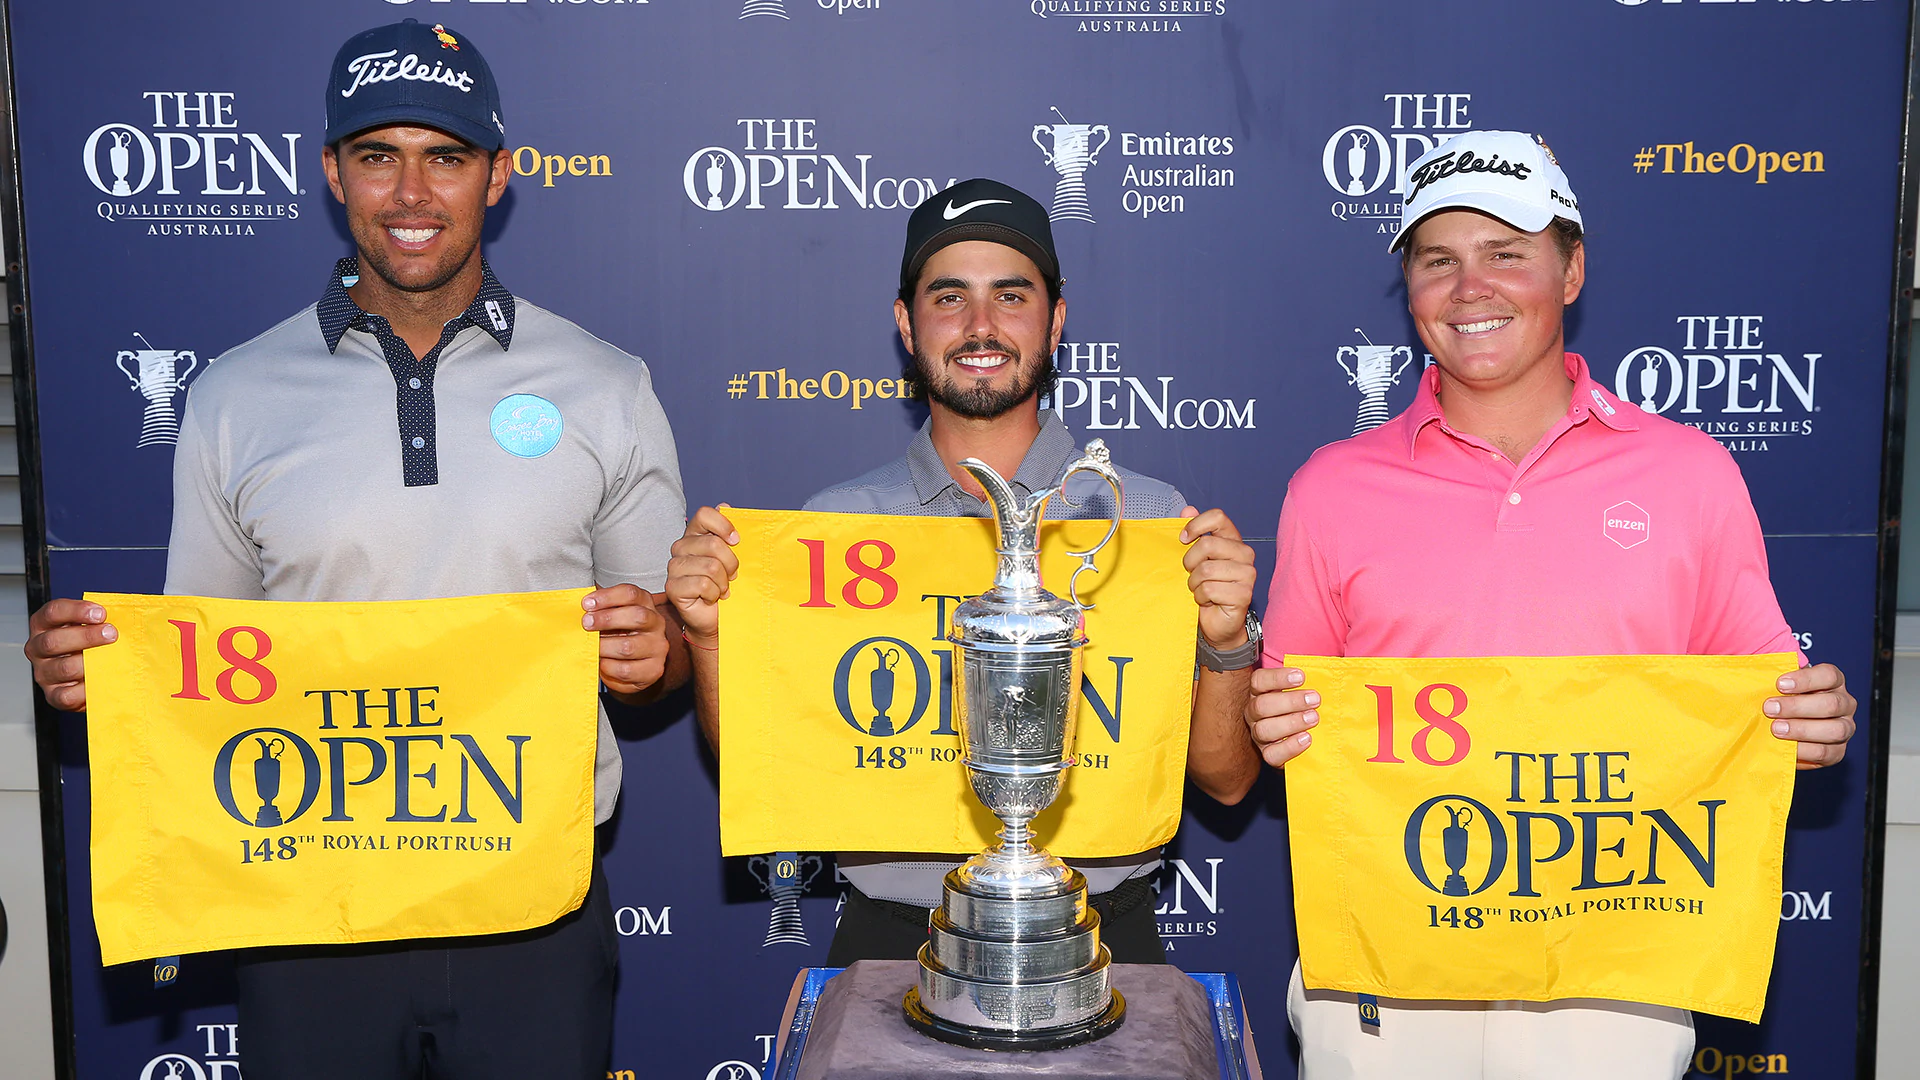 Ancer headlines trio of Open qualifiers in Australia